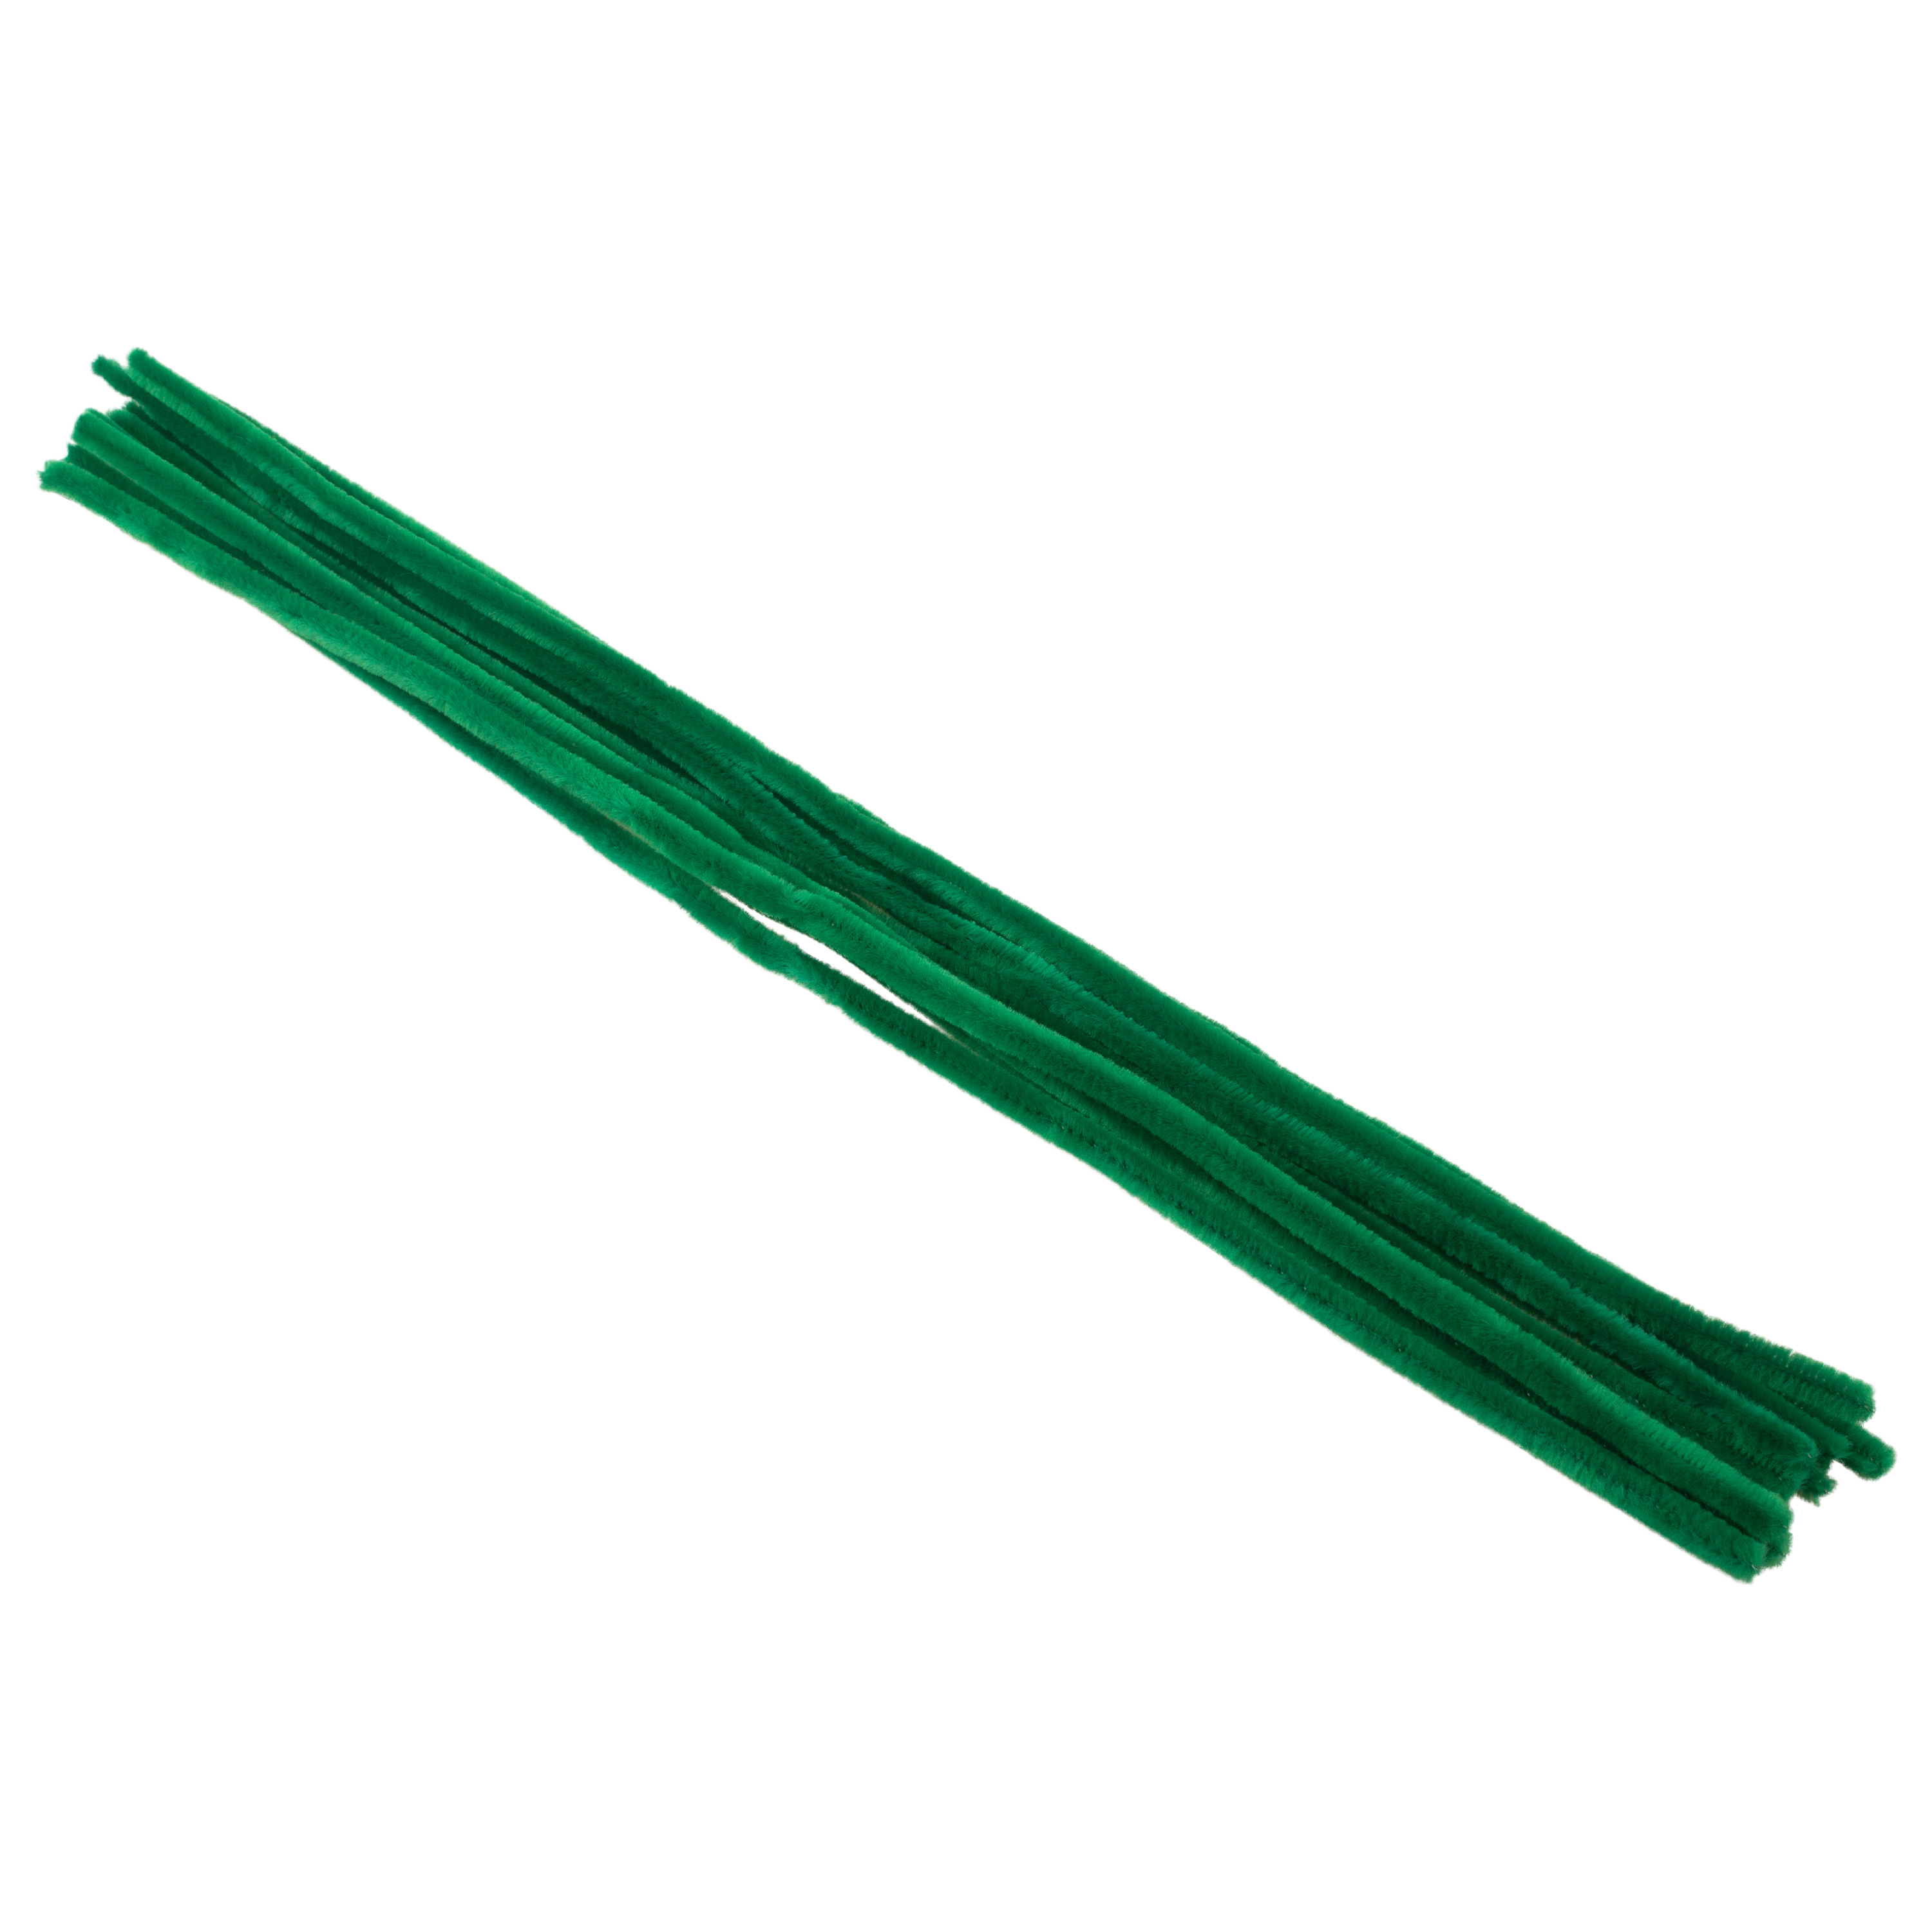 Pfeifenputzer grün, 10 Stück, L: 50 cm